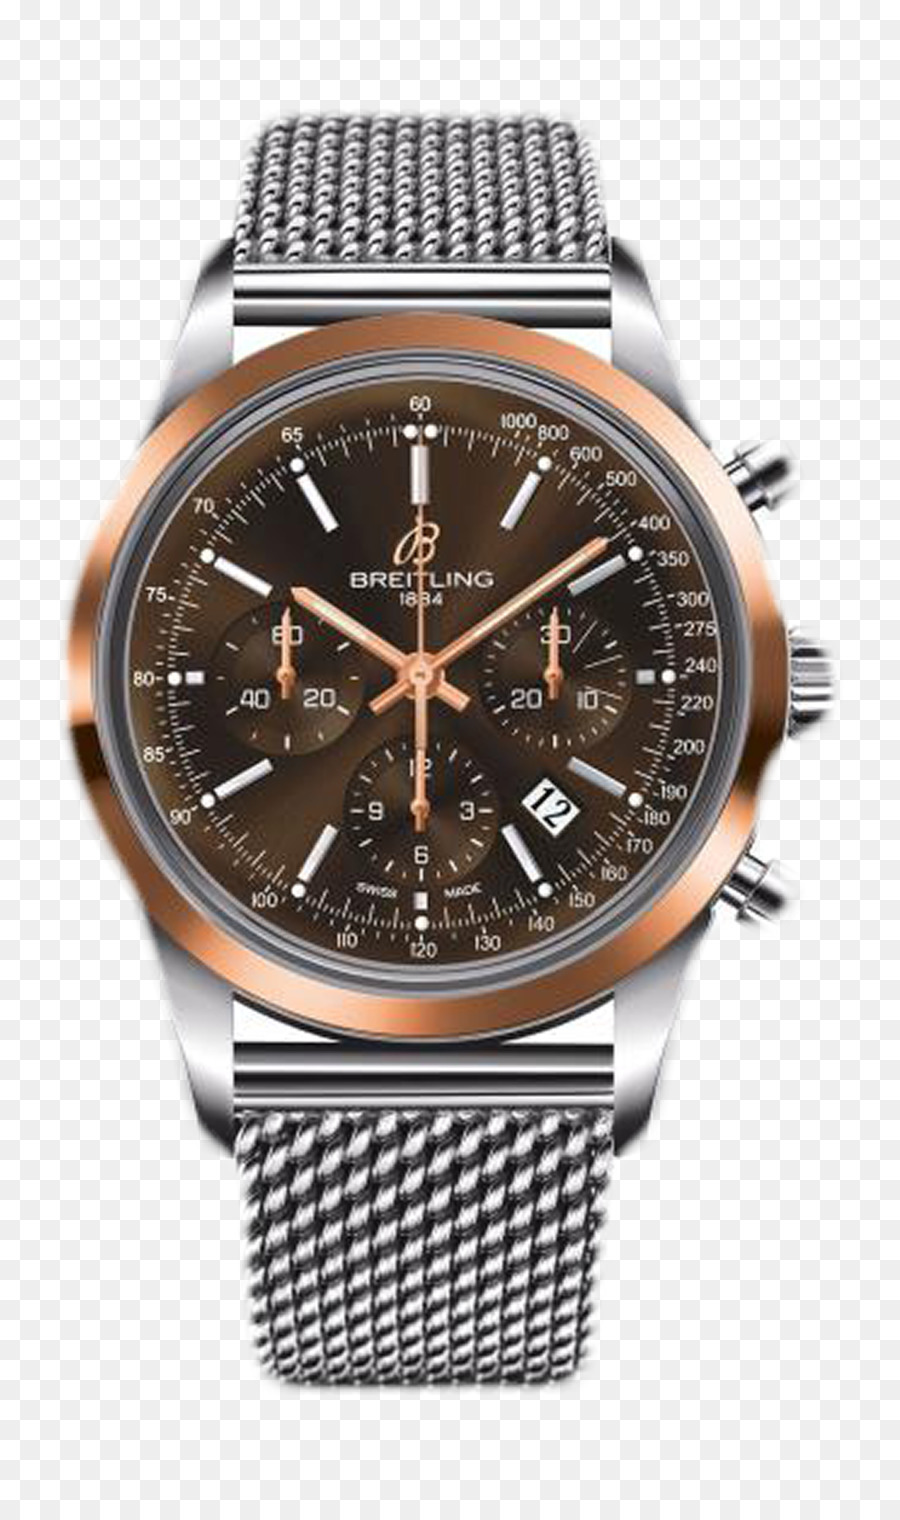 Breitling SA Breitling Transocean Chronograph Chronometer Uhr - Uhr